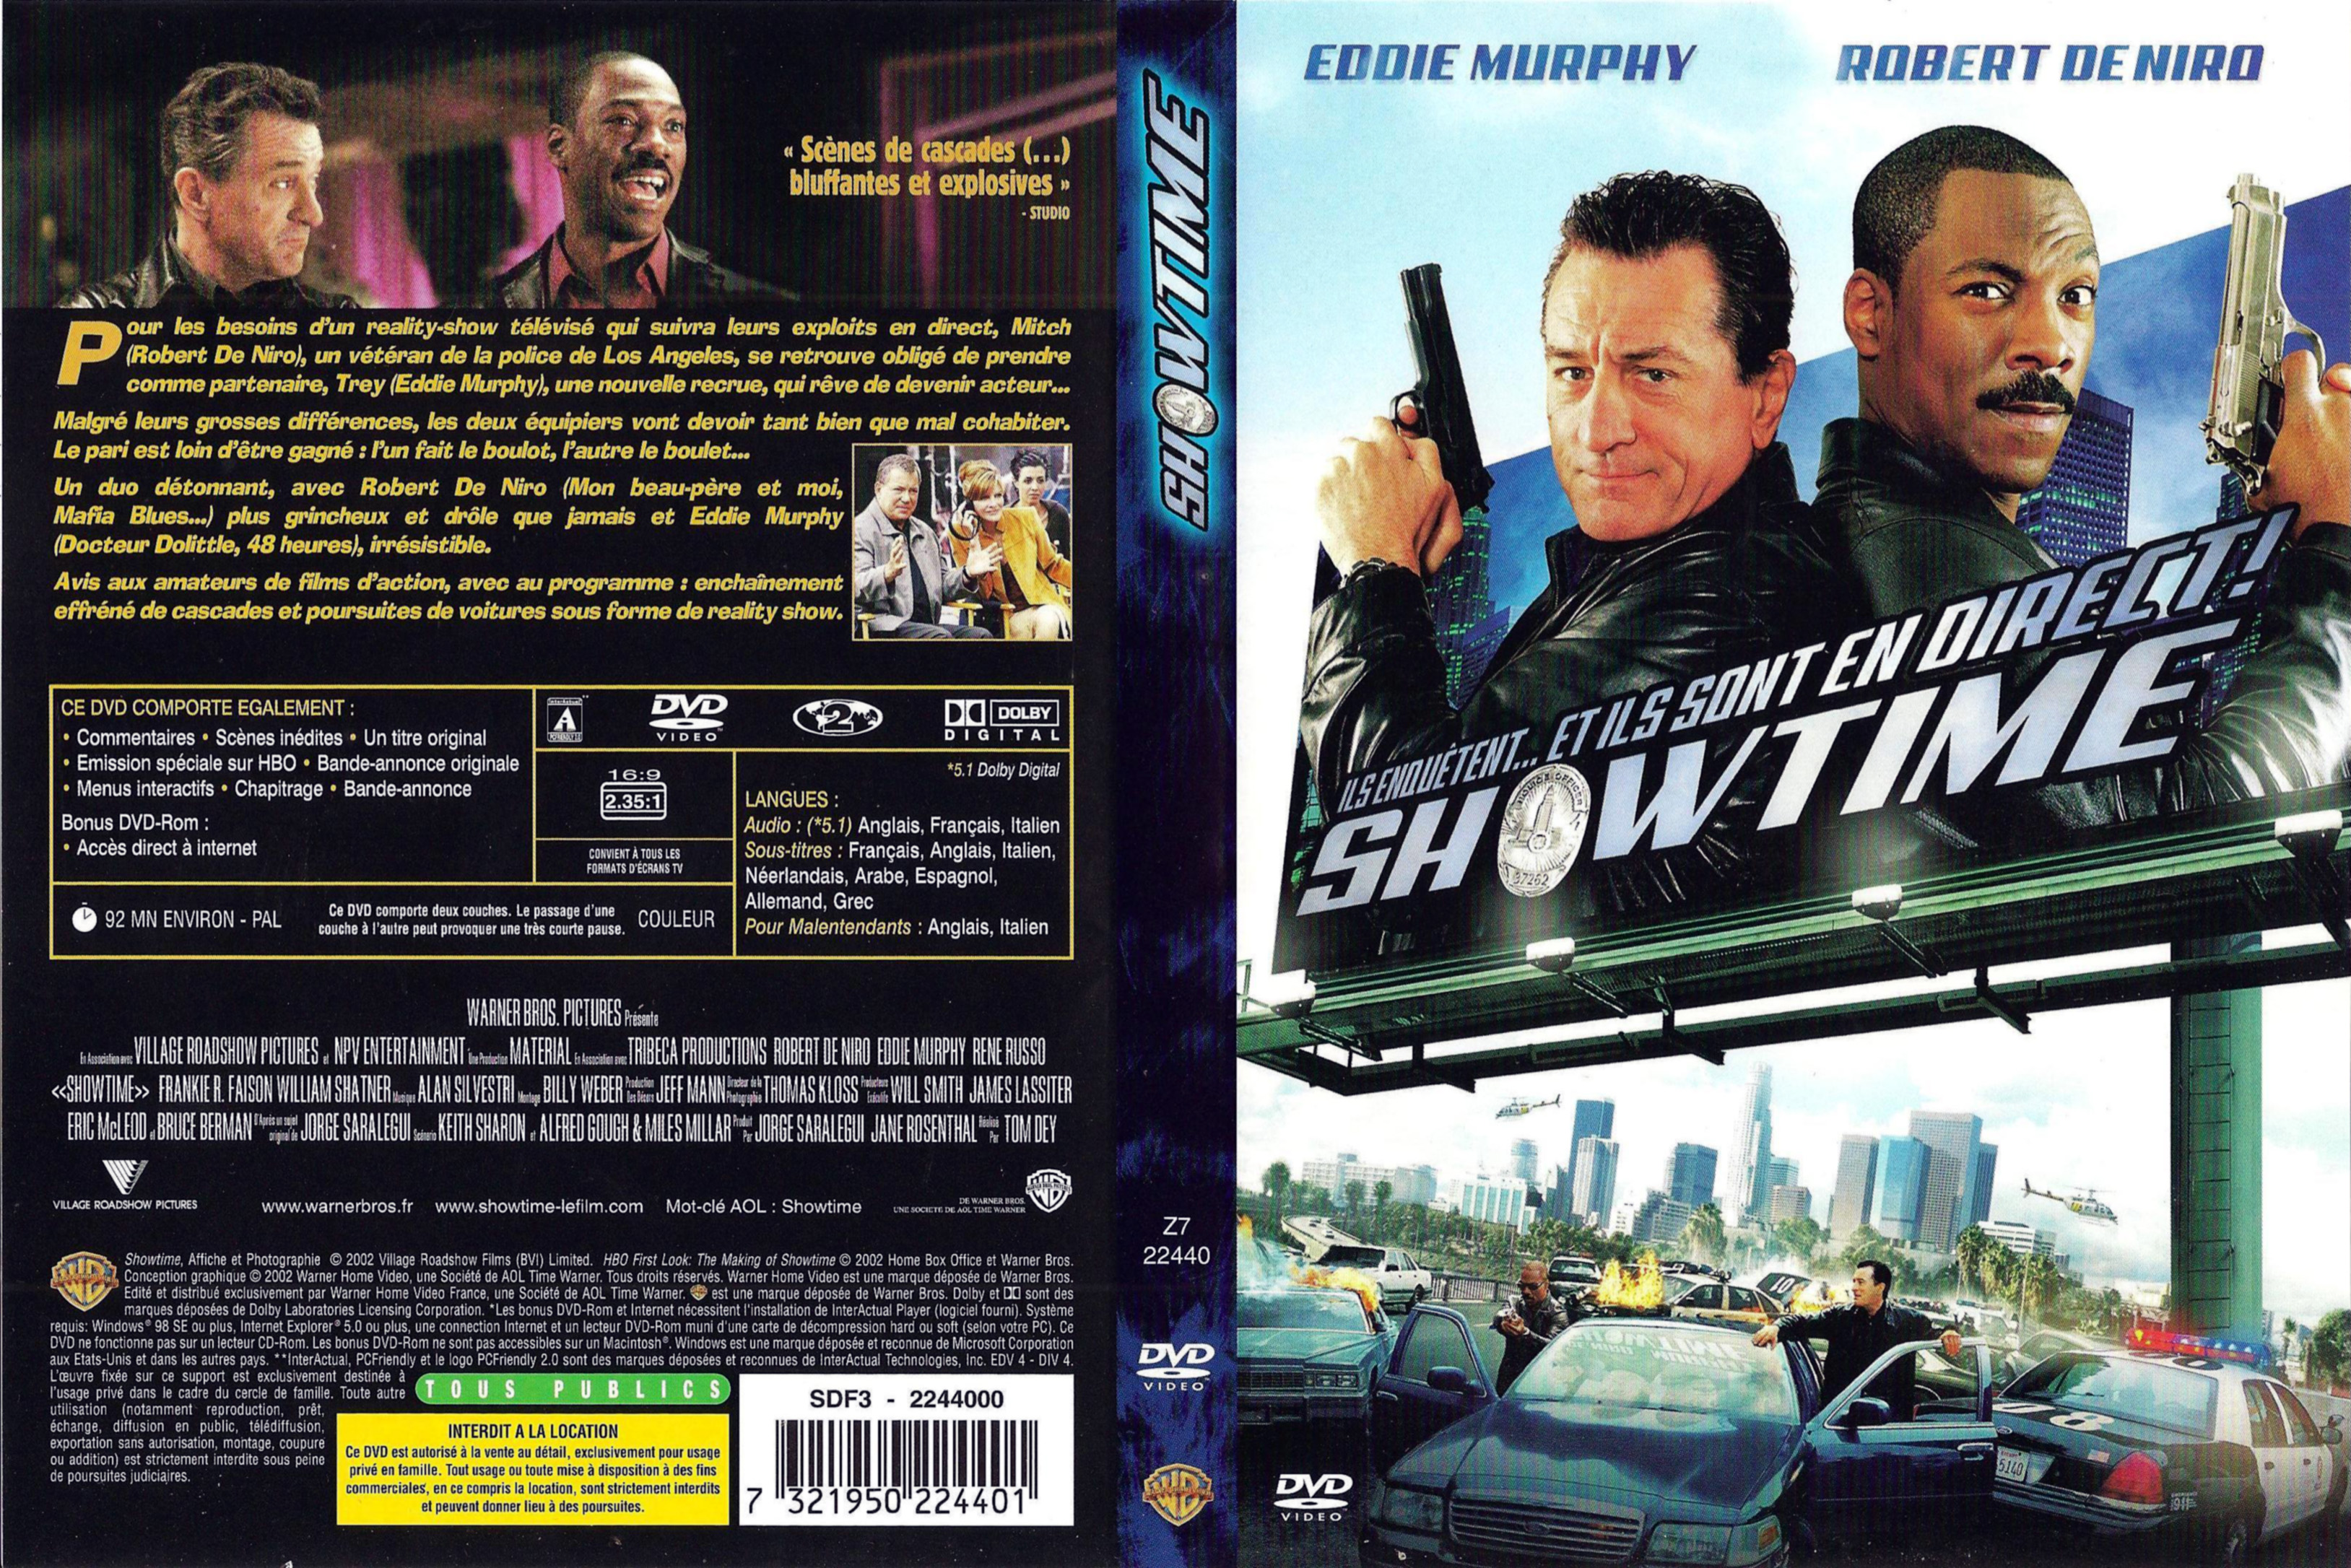 Jaquette DVD Showtime v2